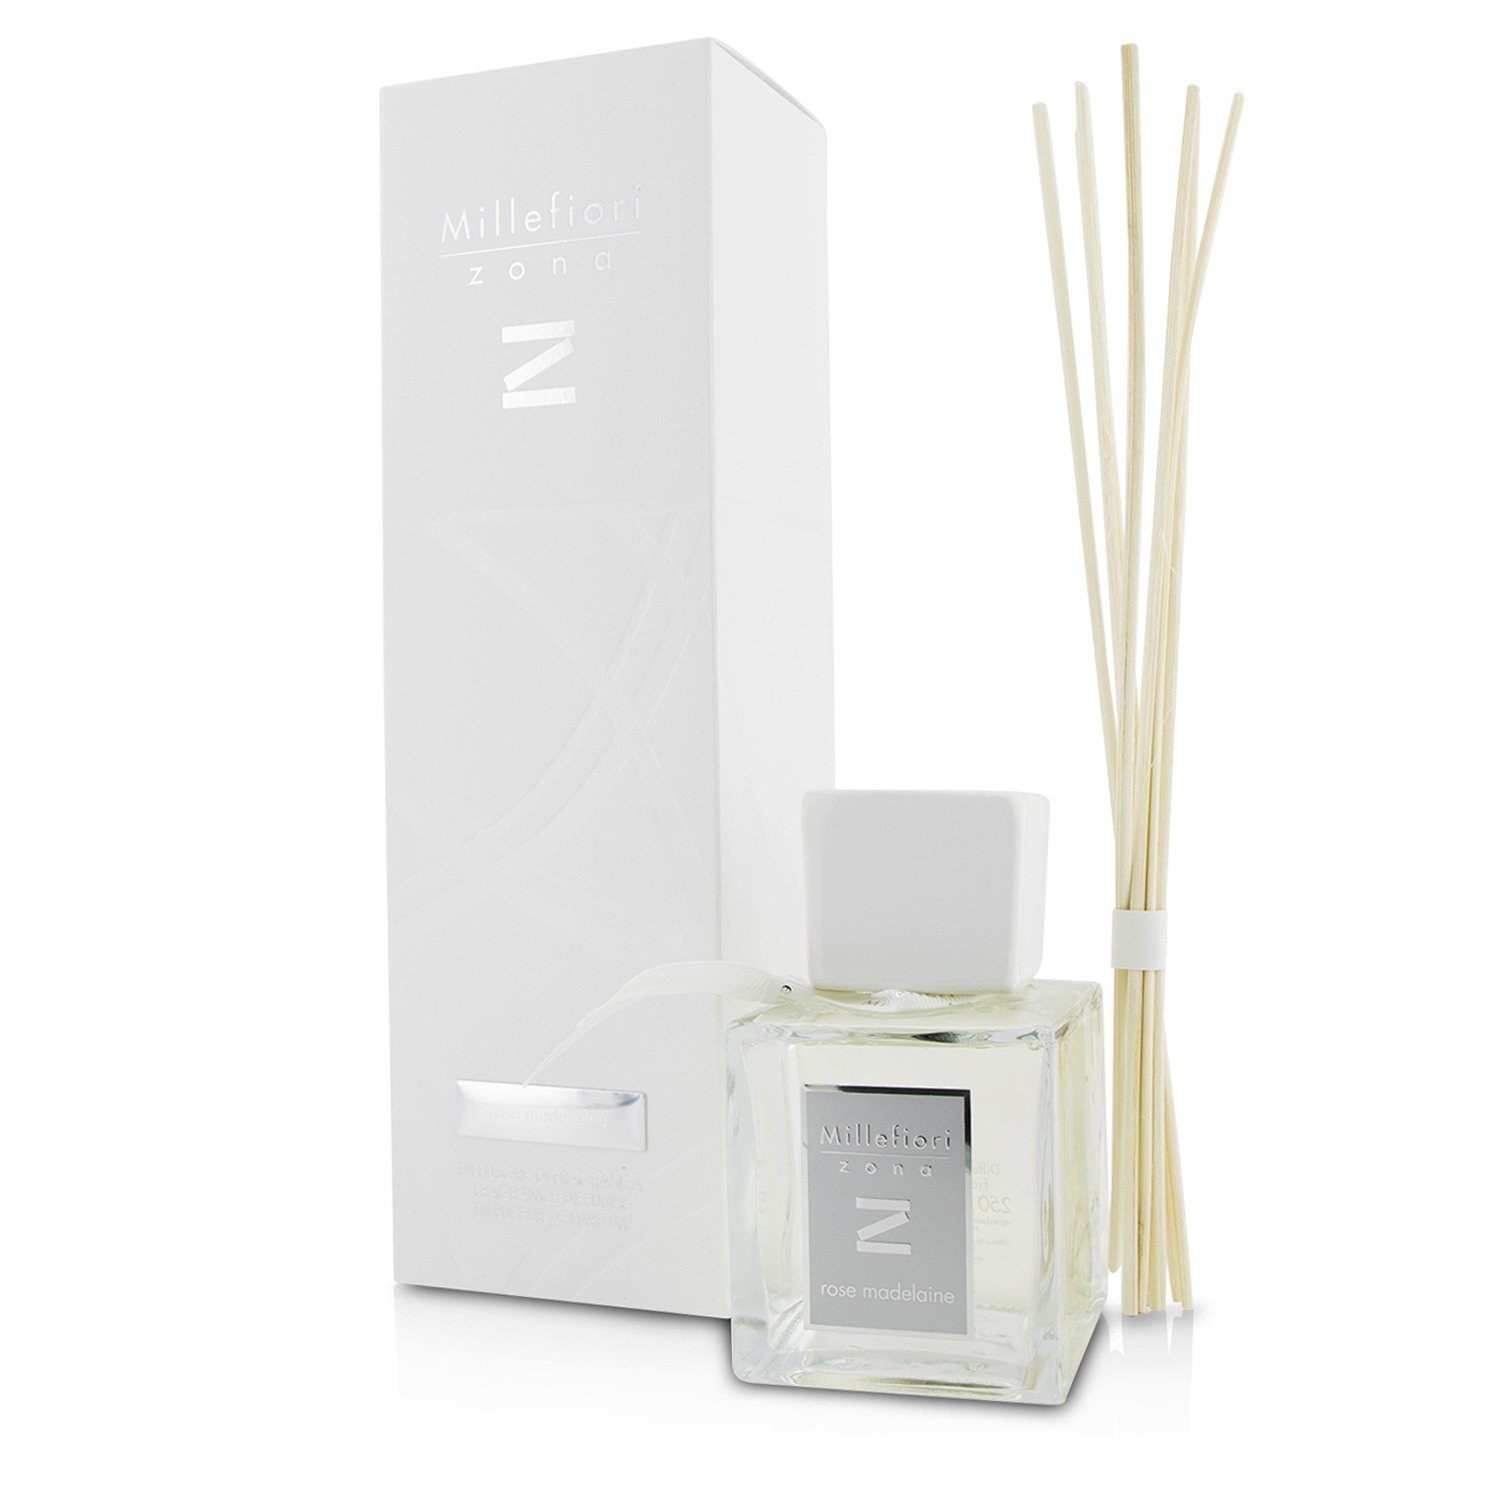 Zona Fragrance Diffuser - Rose Madelaine (New Packaging) Millefiori Image